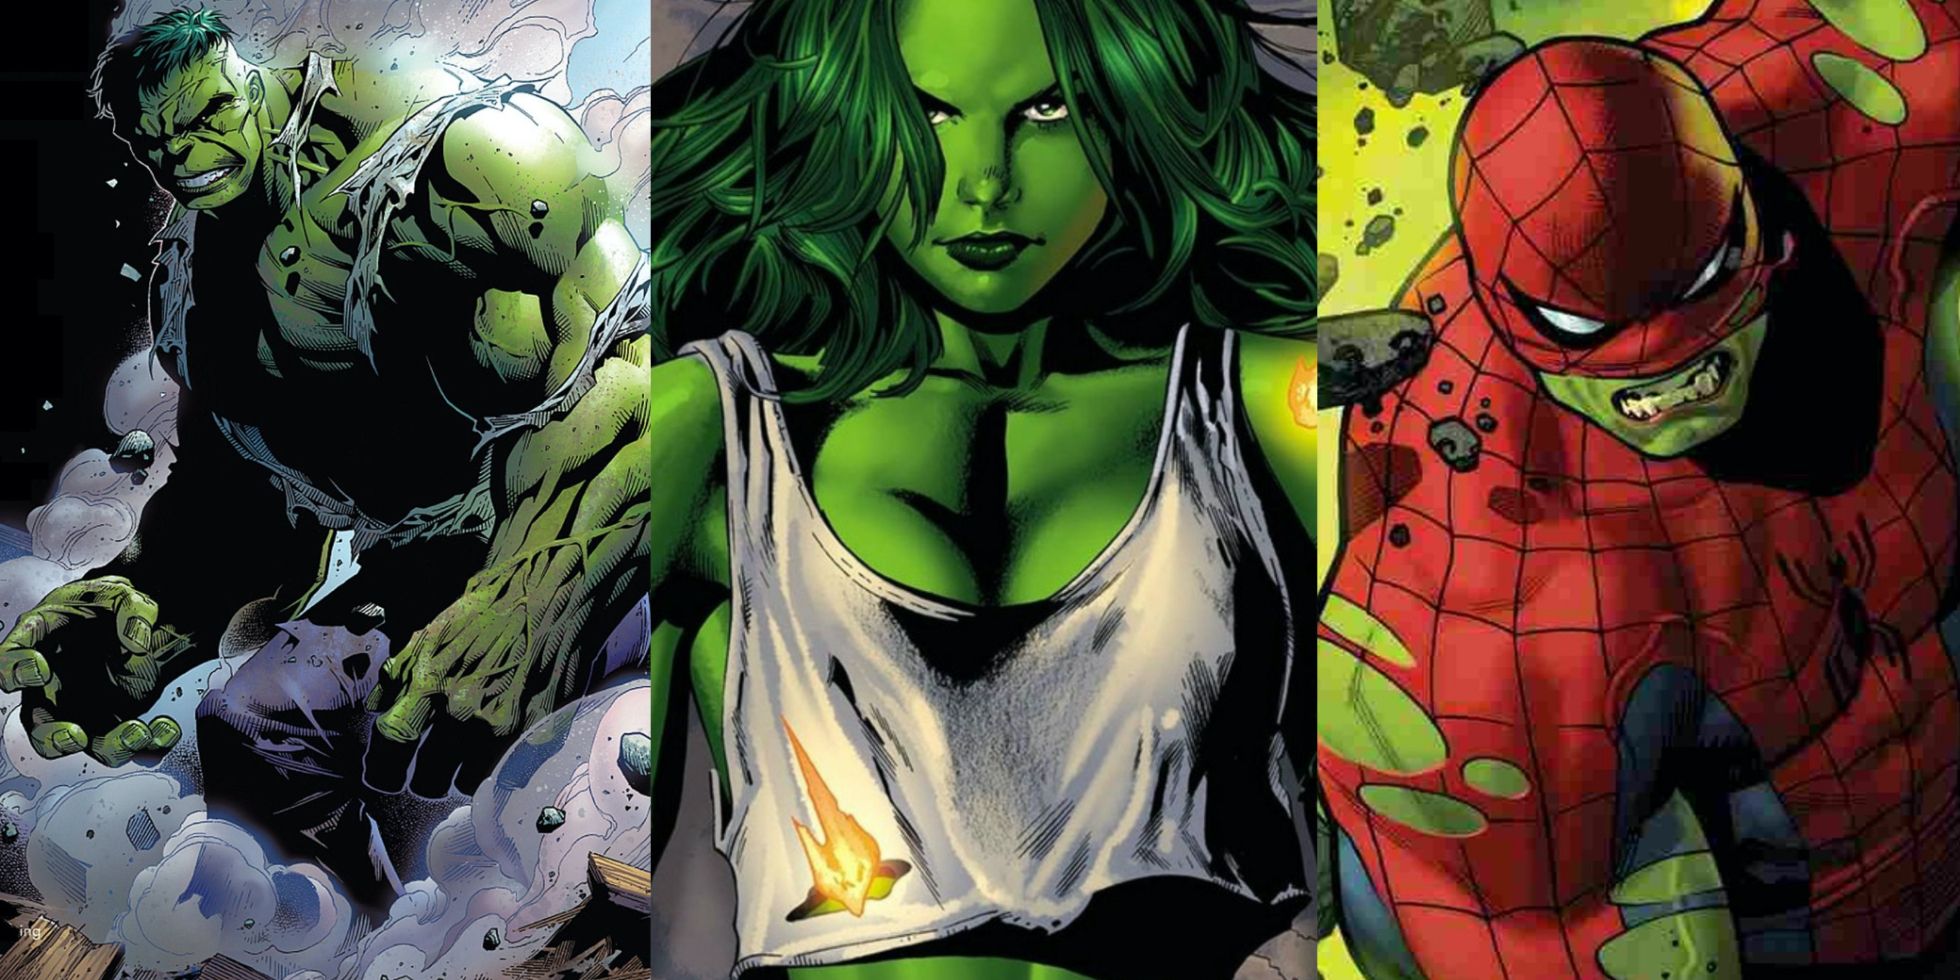 Split image of the Hulk, She-Hulk, and Spider-Hulk from Marvel Comics.